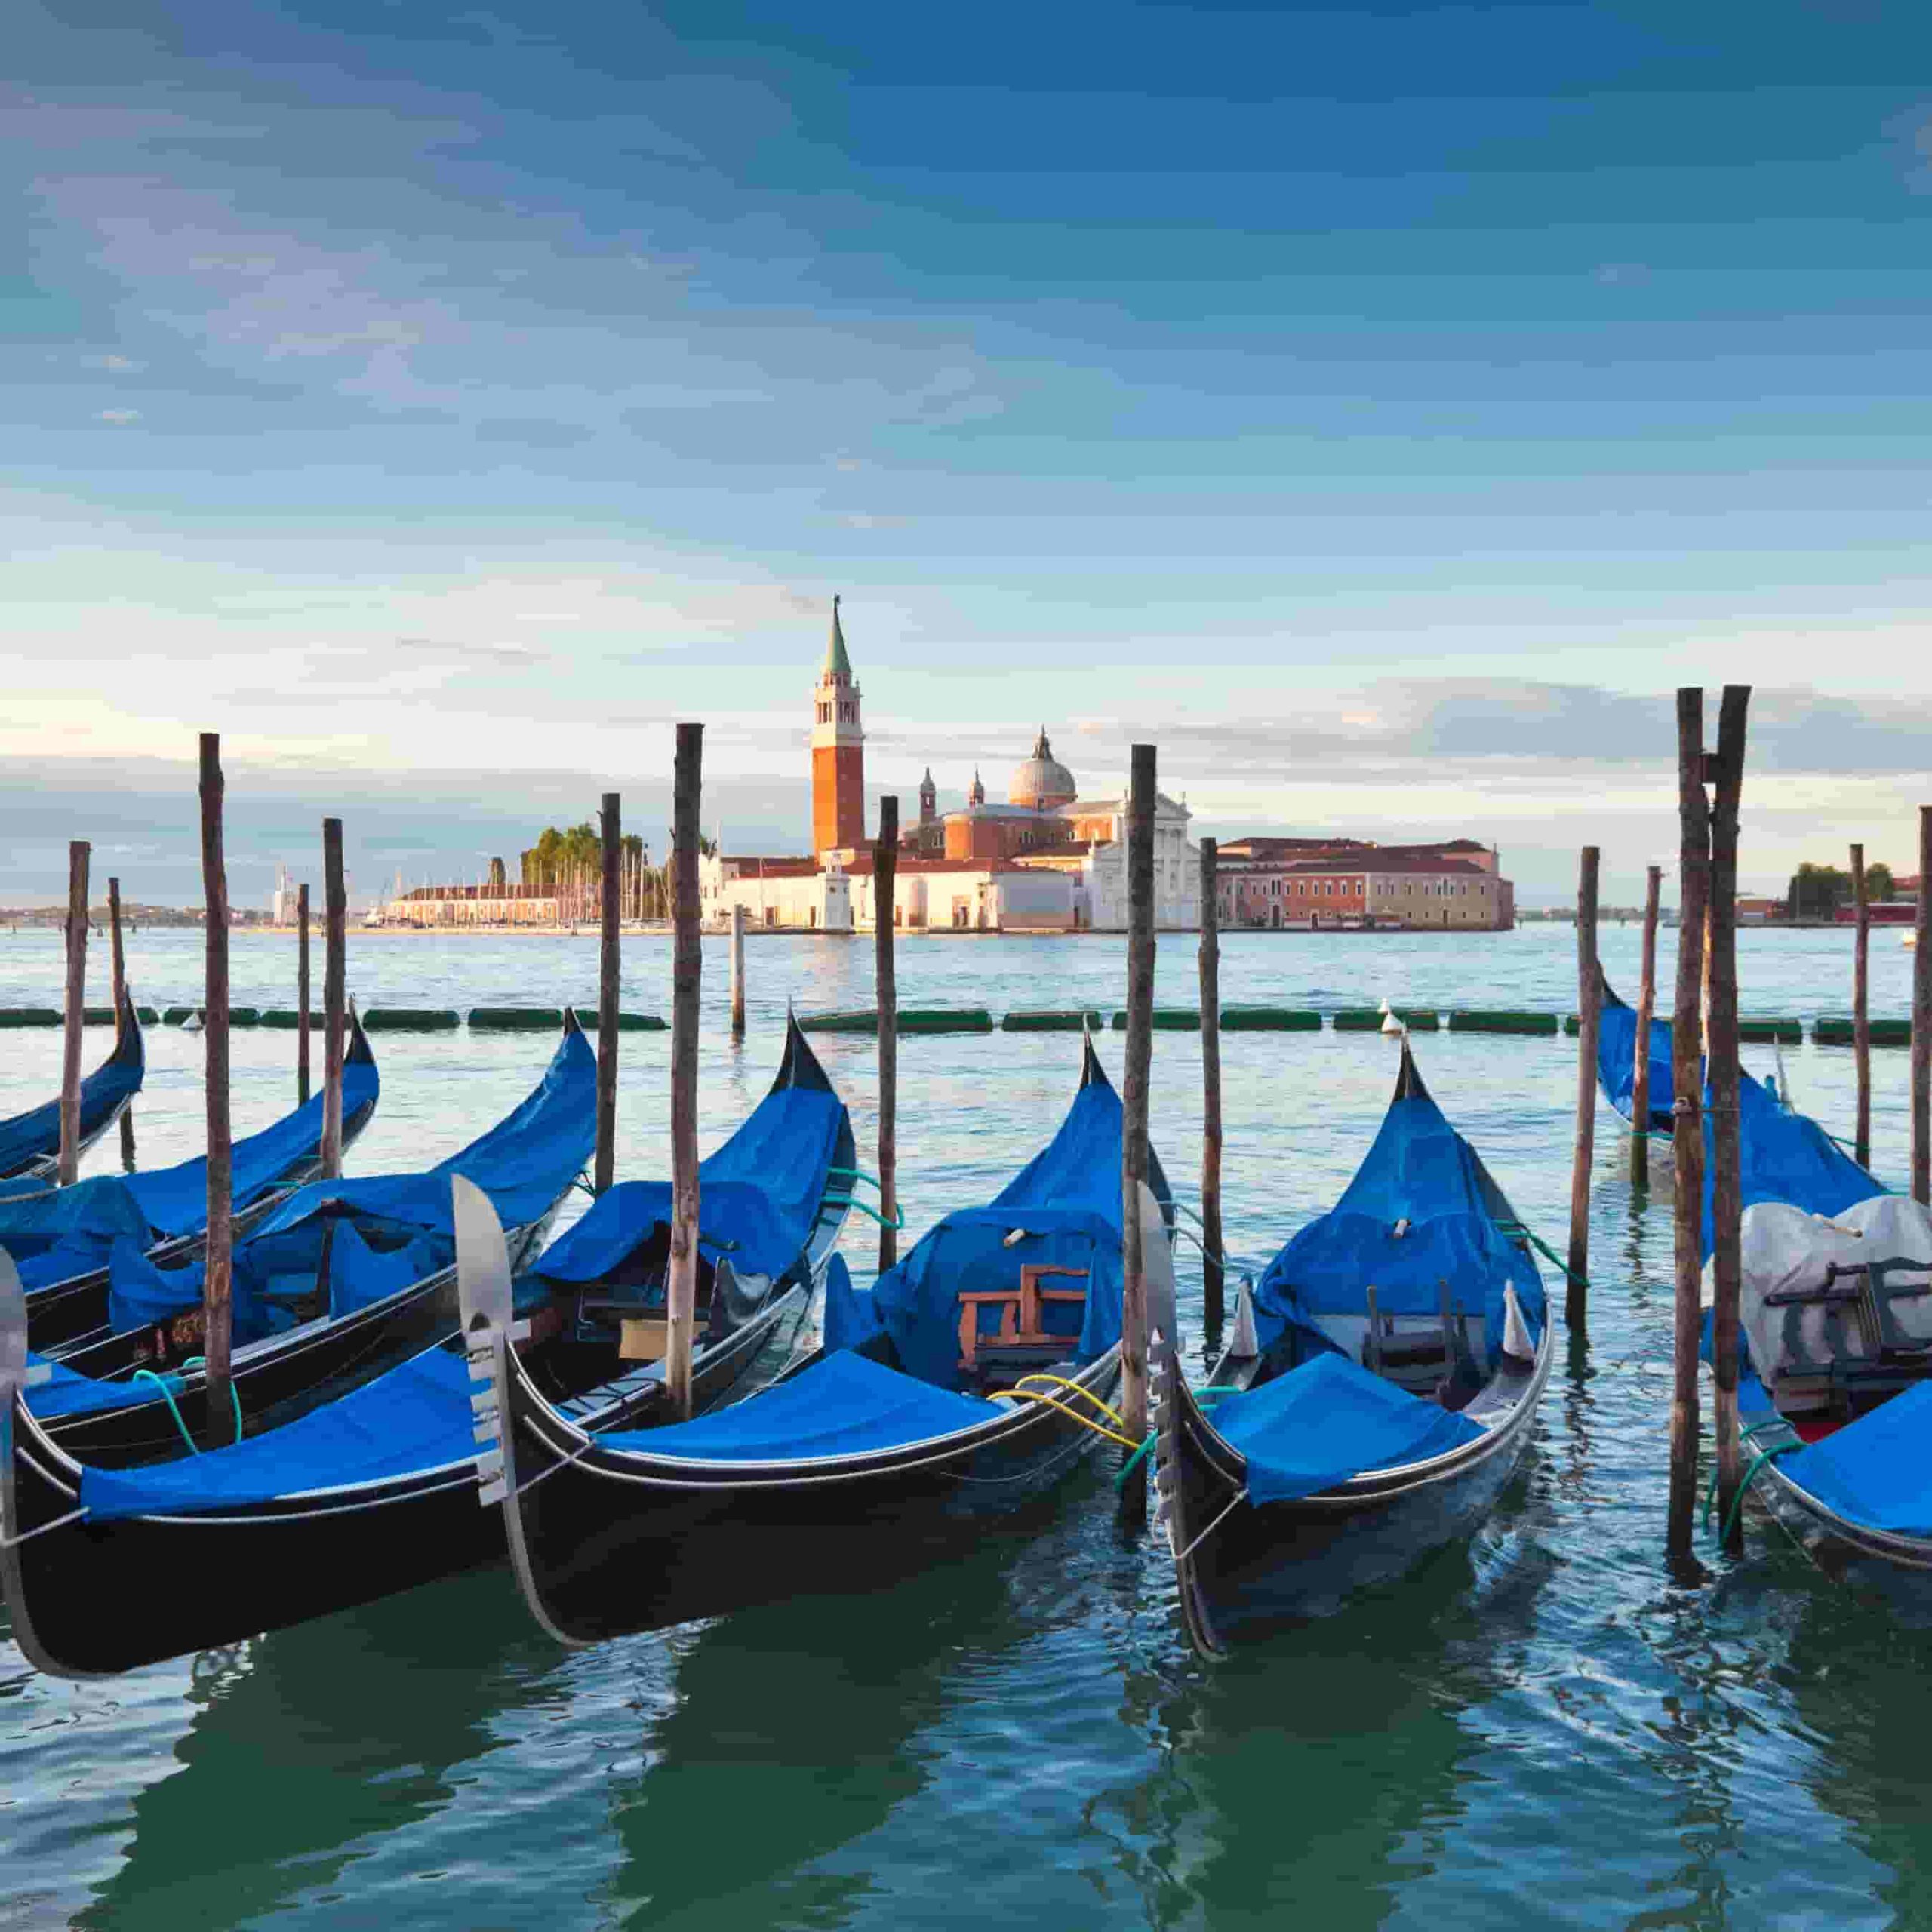 Gondola Venice